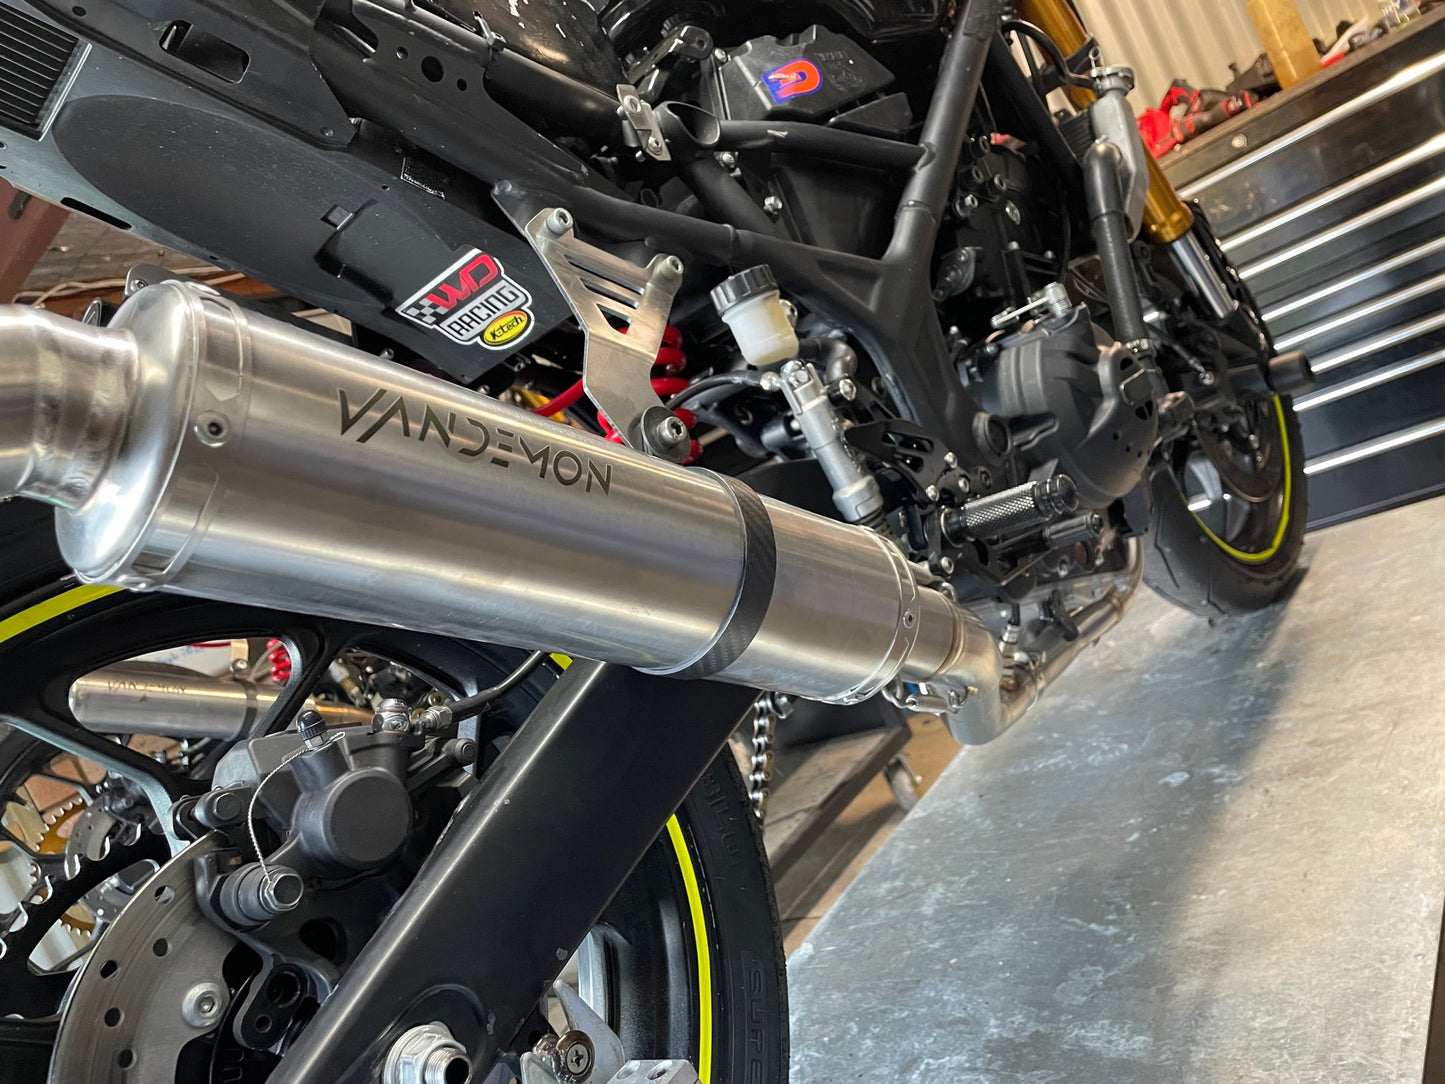 Yamaha YZF-R3 Vandemon Stainless Steel headers